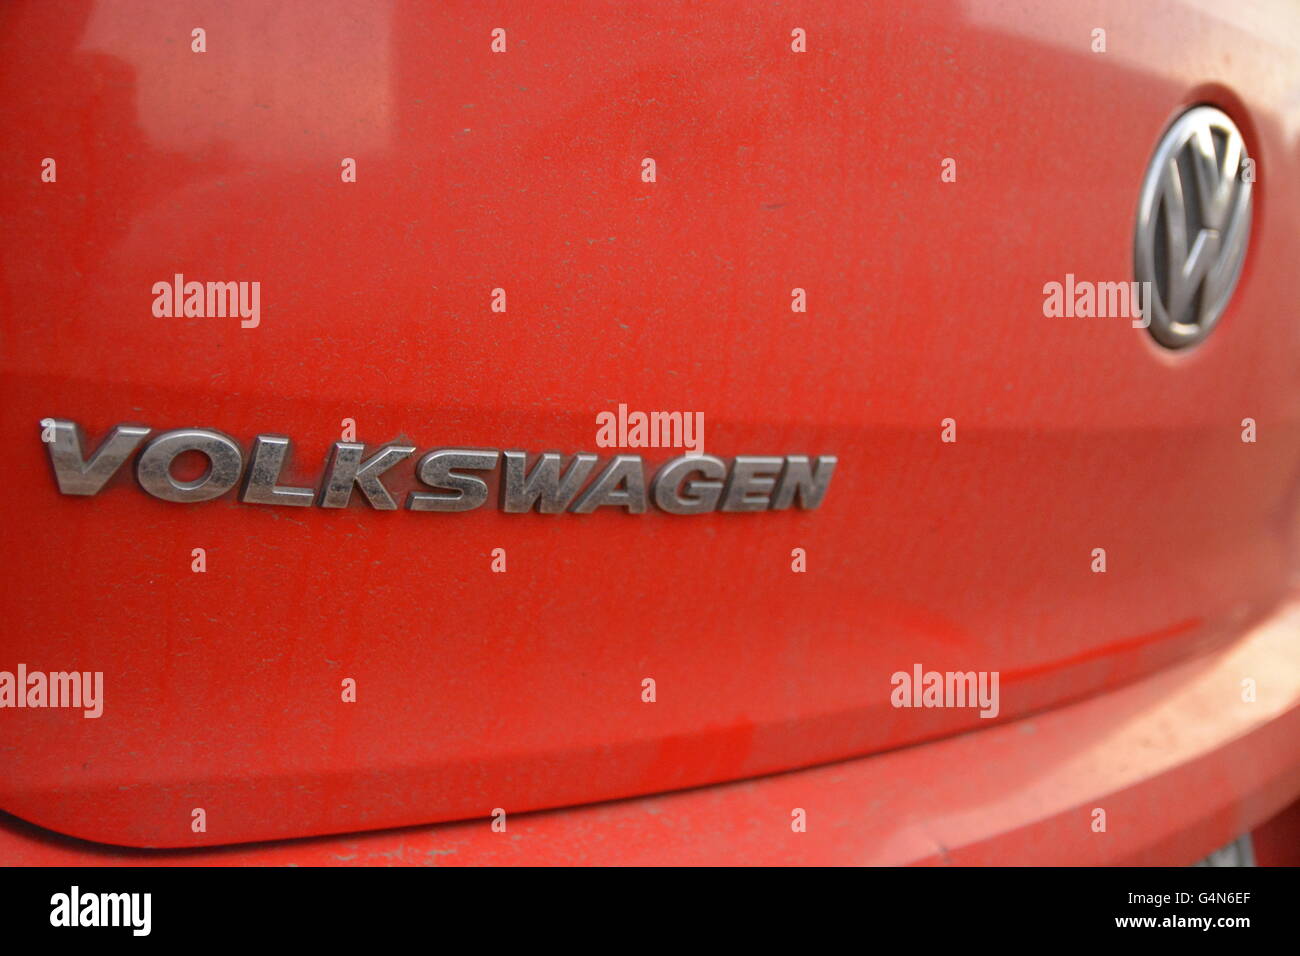 Mumbai, India - November 6, 2015 - Red Volkswagen car Stock Photo